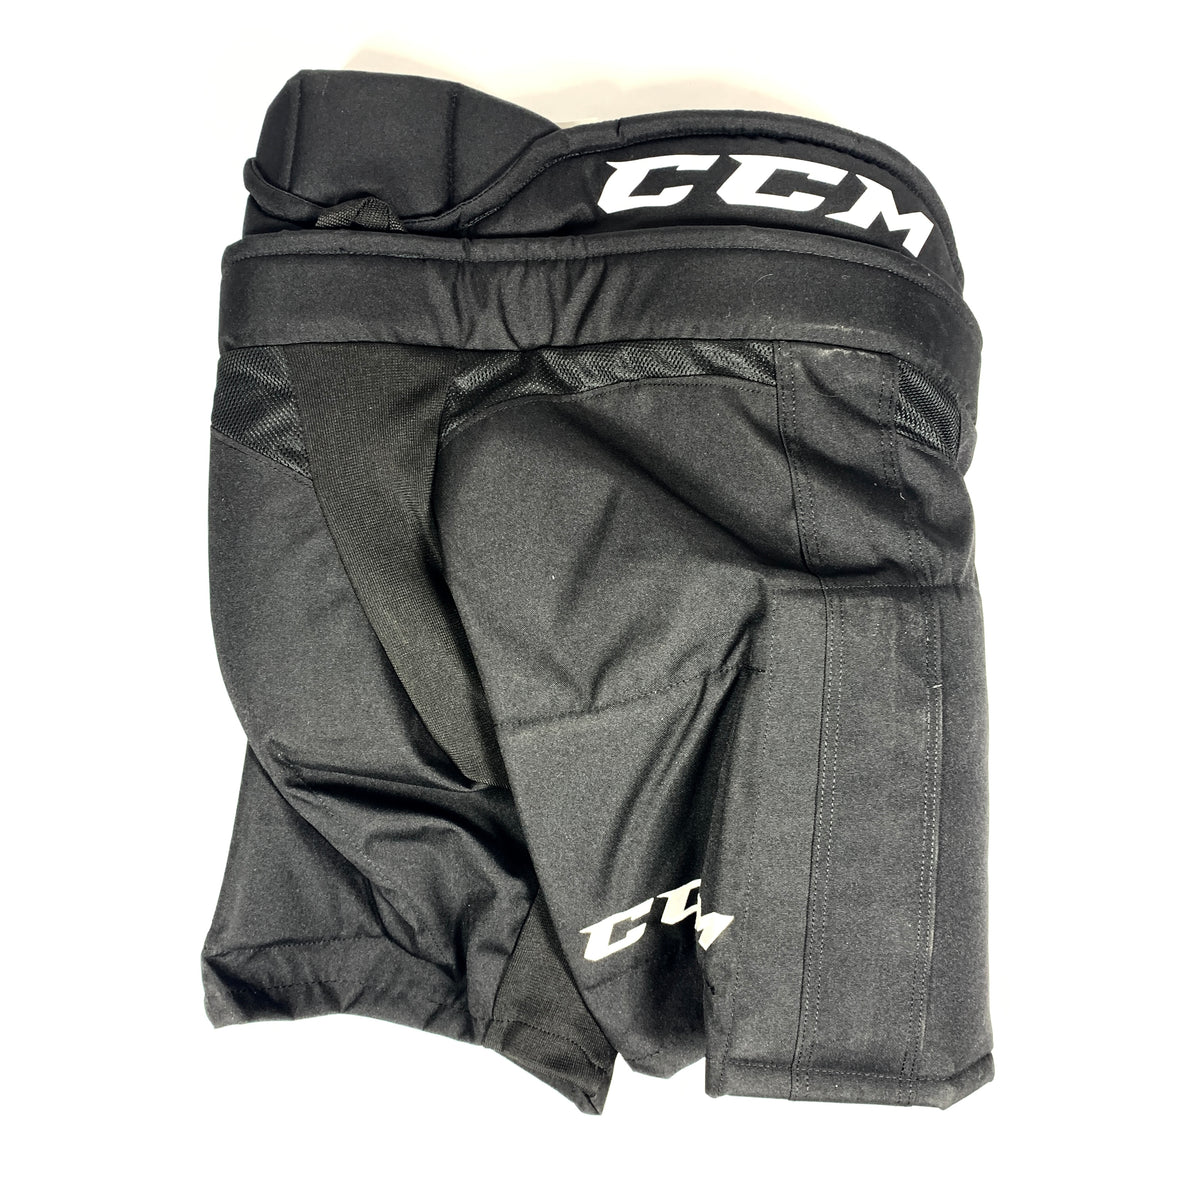 CCM HP31 - Pro Stock Hockey Pants (Royal Blue) – HockeyStickMan